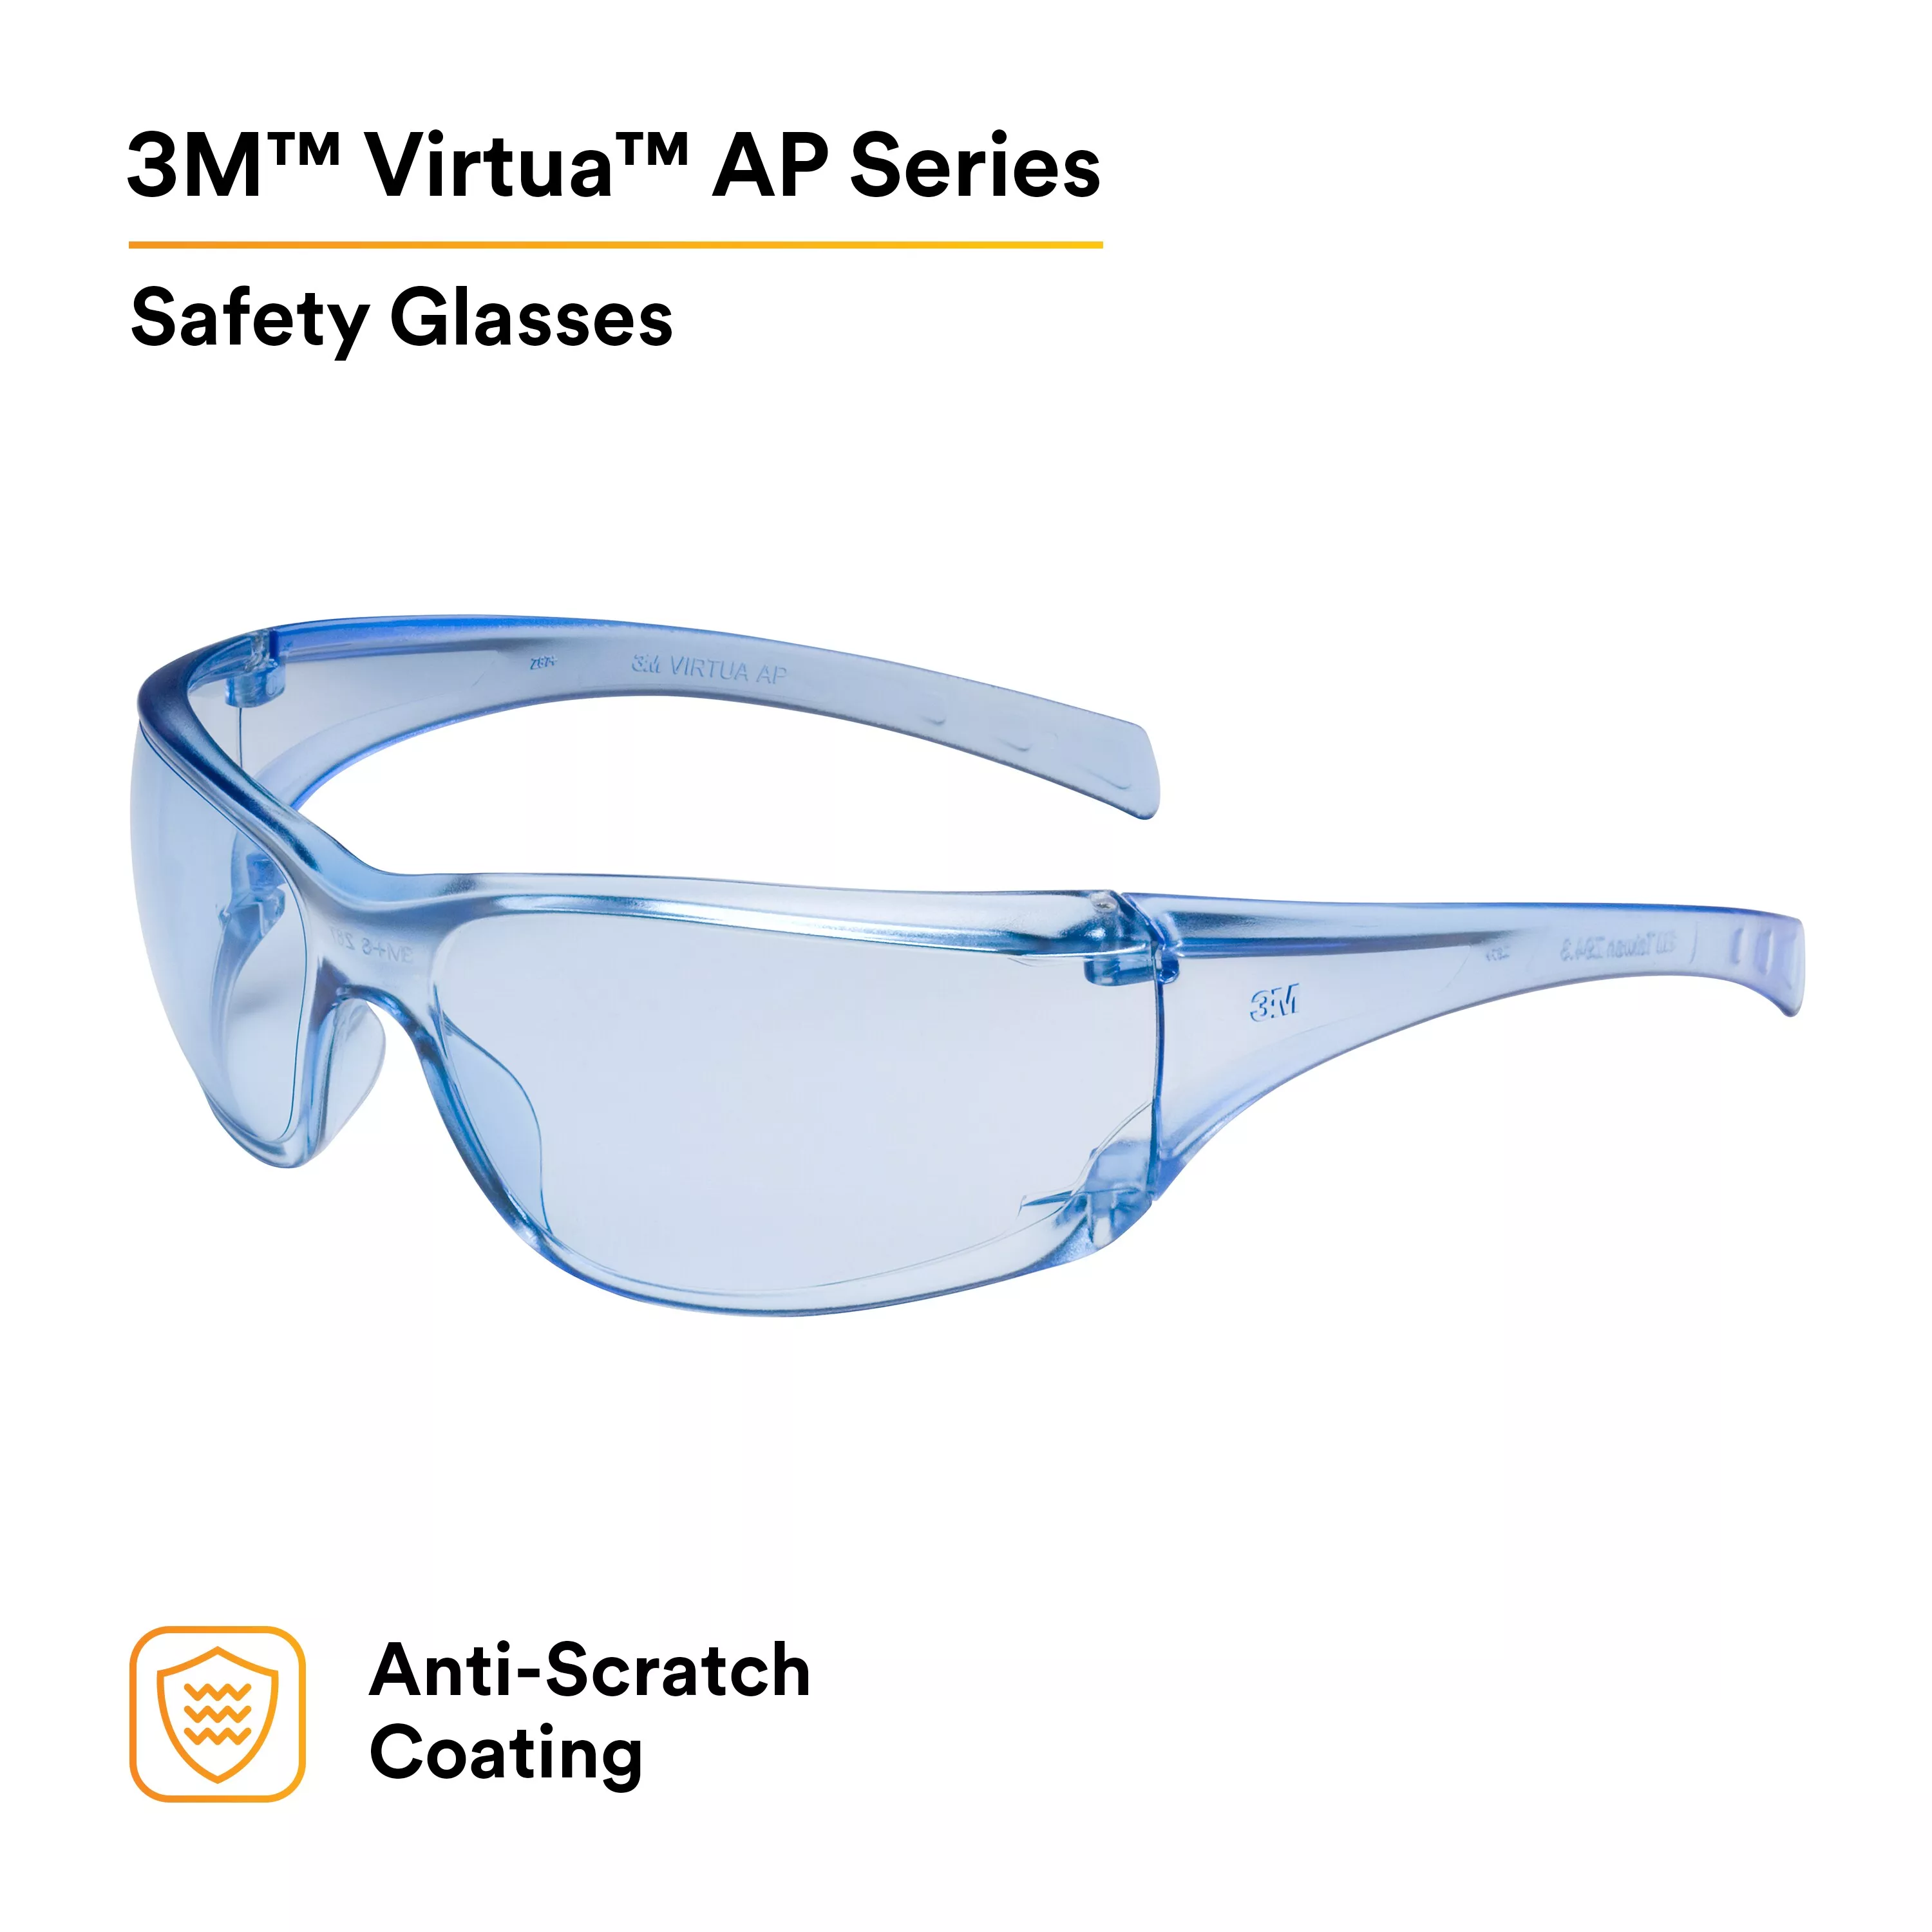 Product Number 11816-00000-20 | 3M™ Virtua™ AP Protective Eyewear 11816-00000-20 Light Blue Hard Coat
Lens